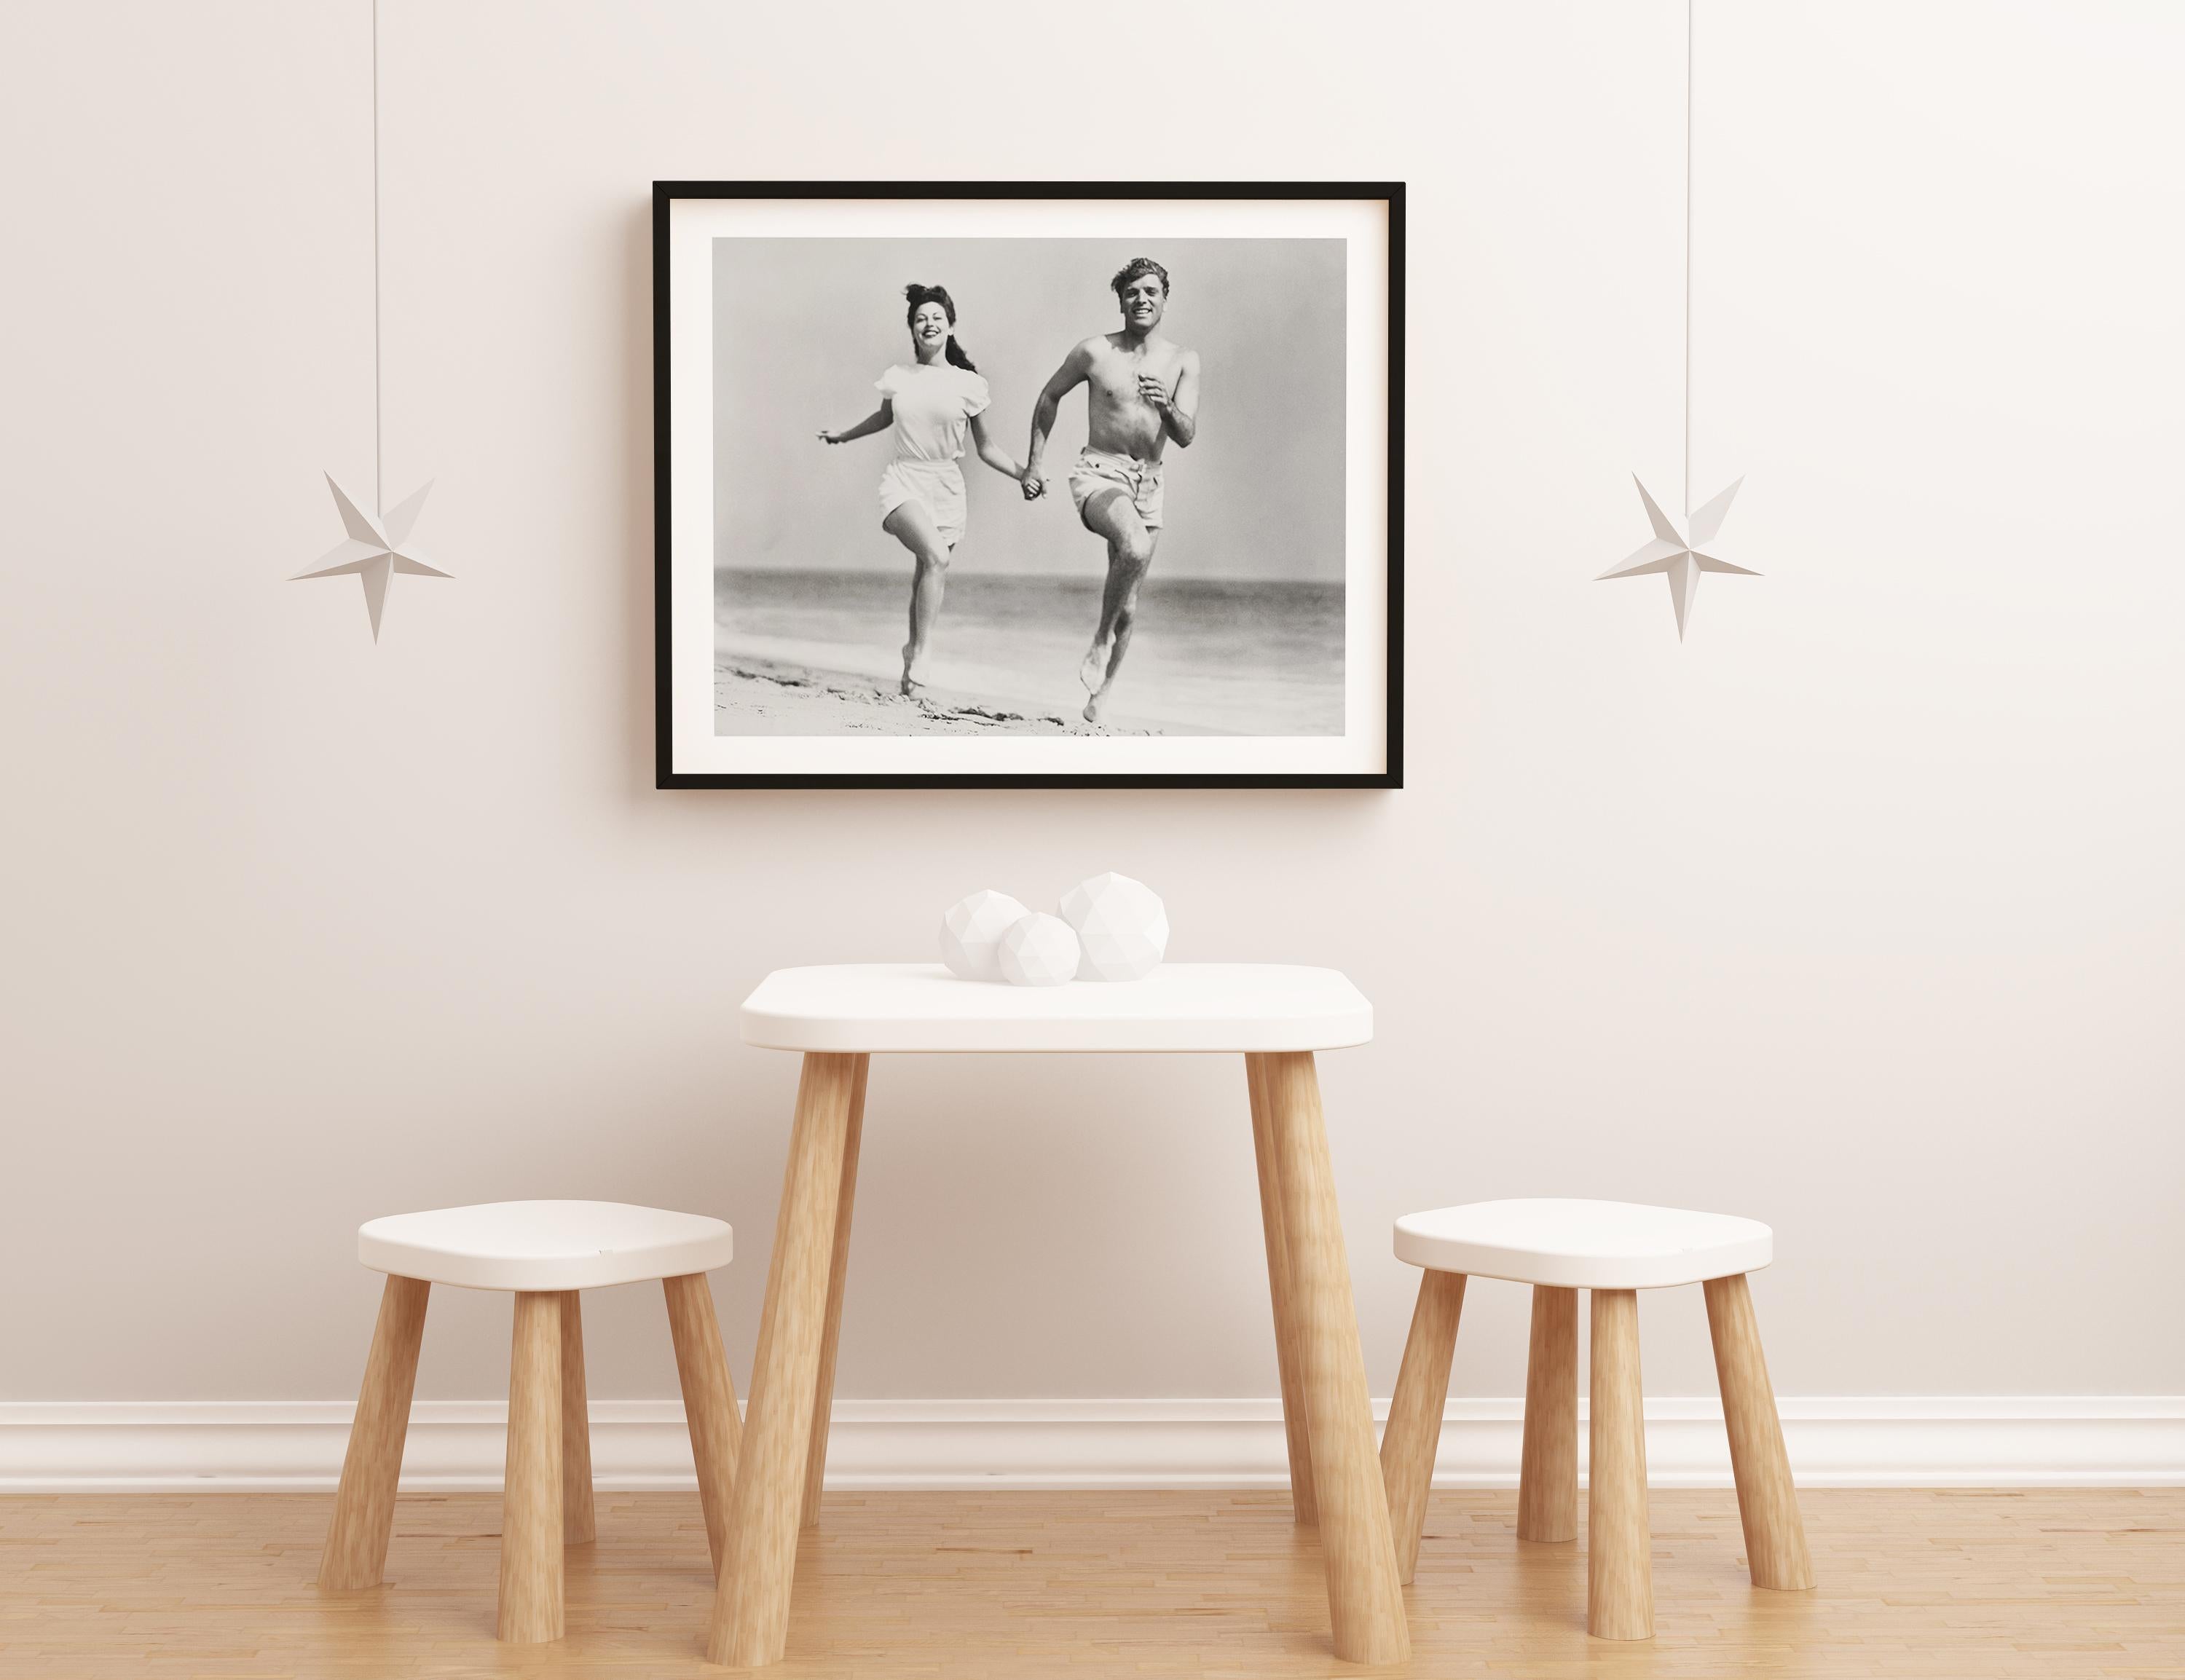 Burt Lancaster and Ava Gardner Running on the Beach Globe Photos Fine Art Print - Gray Portrait Photograph by Unknown